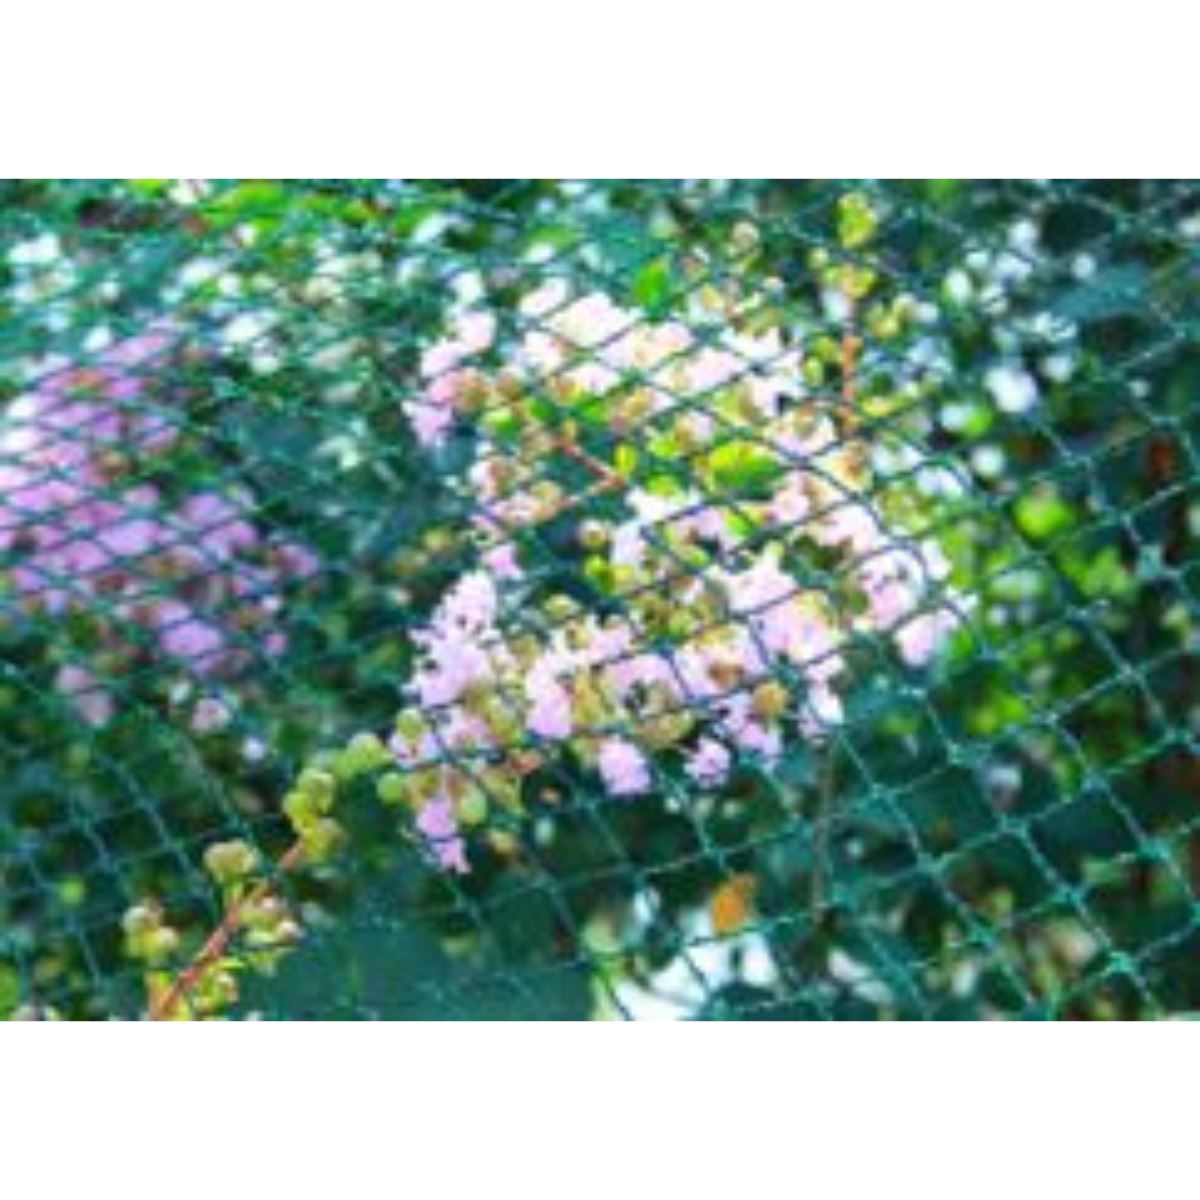 Famiflora bird net 400x500cm - 30g/m² - Mesh size 20x20mm